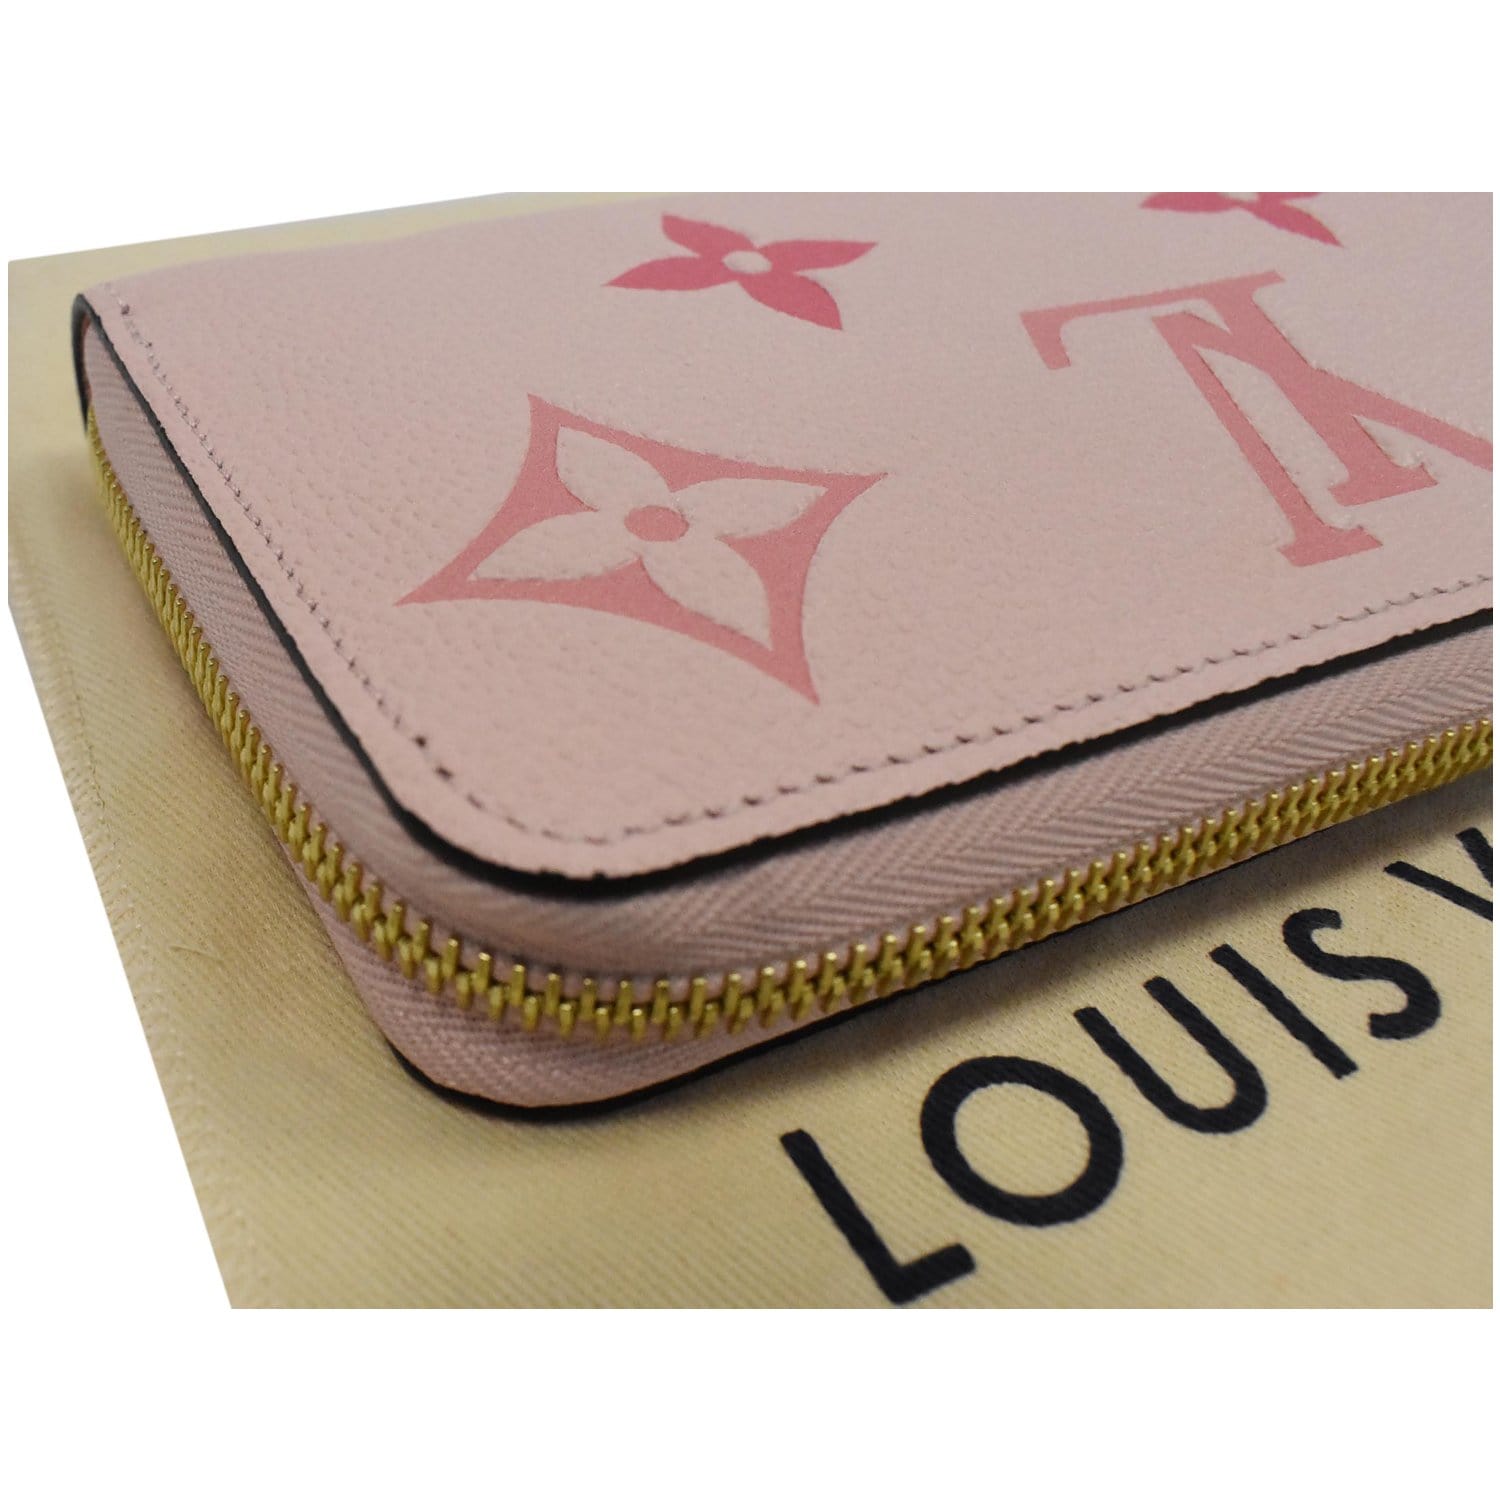 Louis Vuitton Pink Monogram Empreinte Zoe Wallet QJAJOT1DPB001